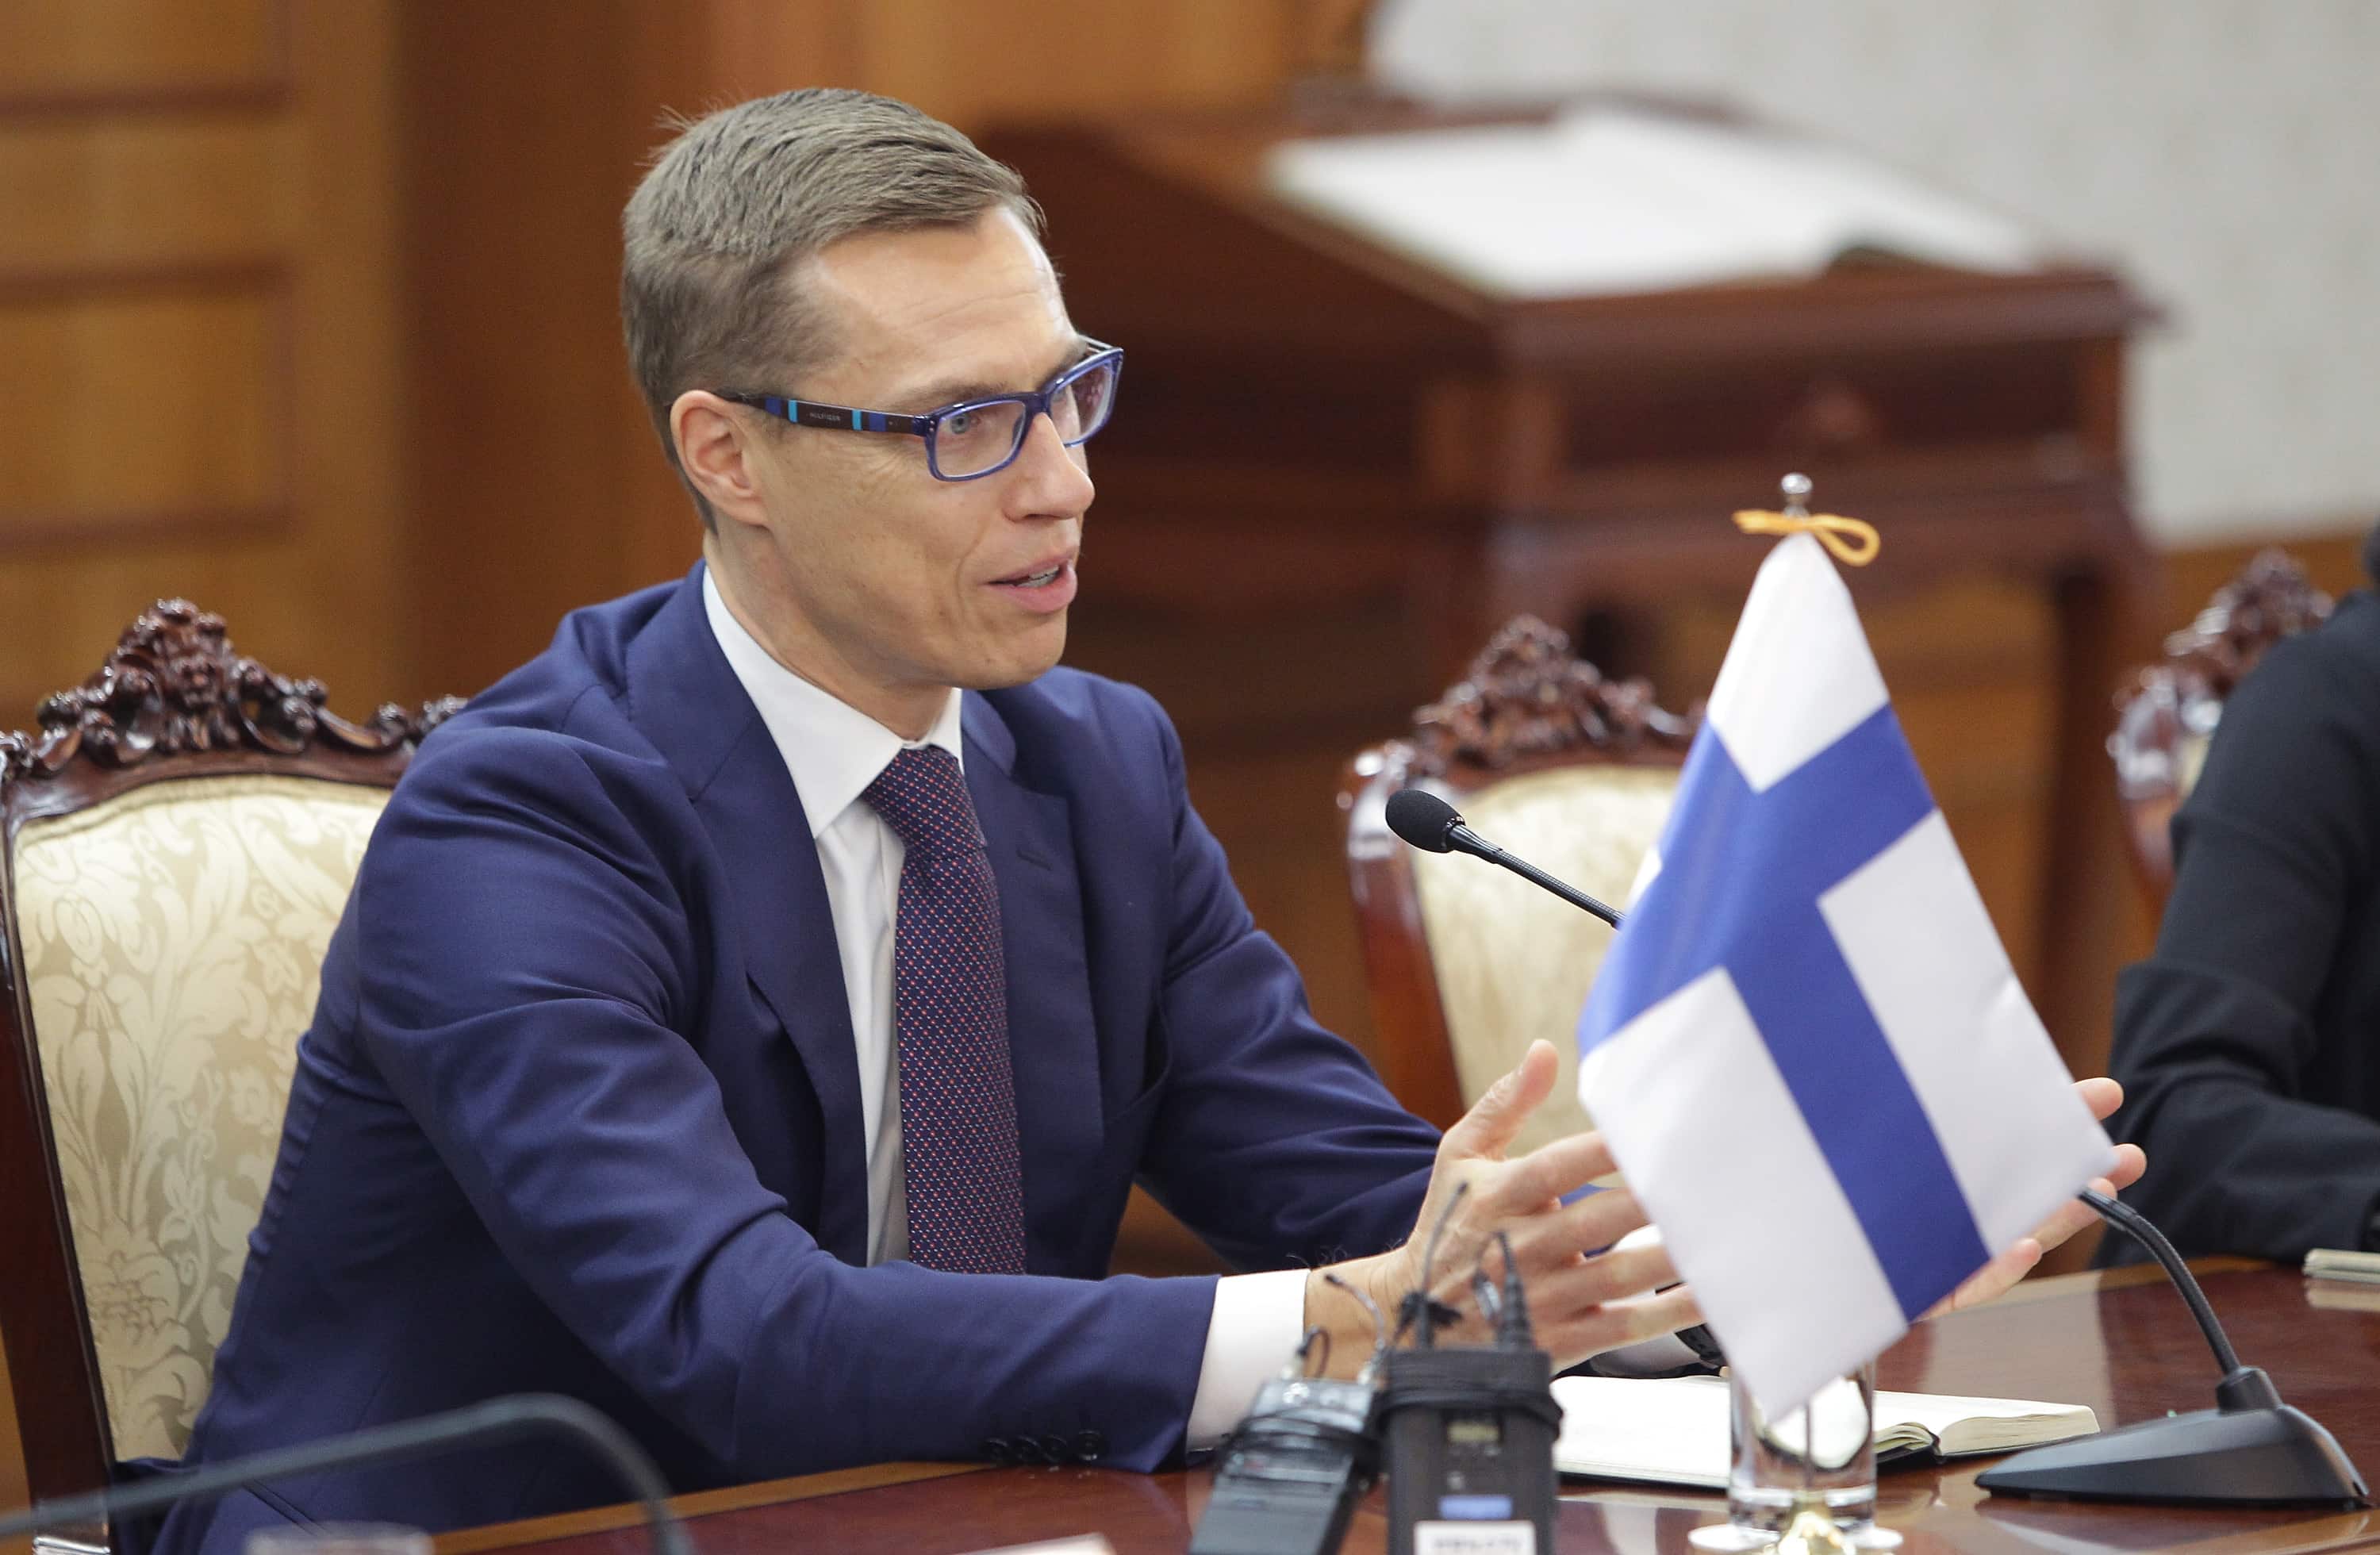 Alexander Stubb Wins Finland's Presidential Election